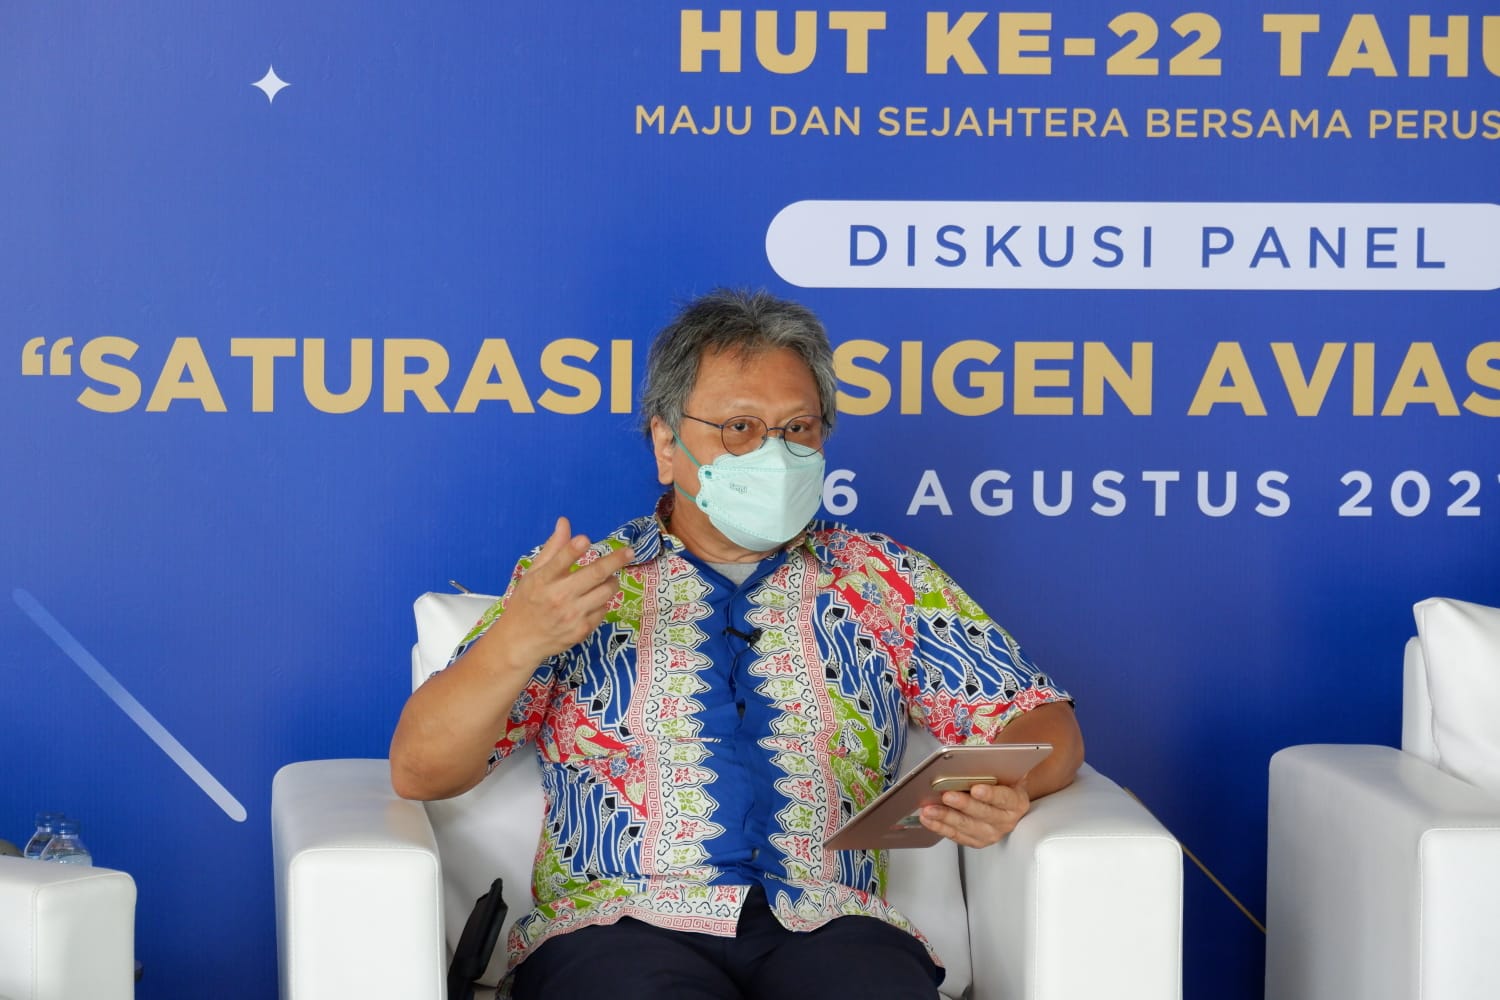 	Serikat Karyawan PT Angkasa Pura II atau Sekarpura II menggelar diskusi panel pada Kamis, 26 Agustus 2021 bertajuk 'Saturasi Oksigen Aviasi Indonesia'.